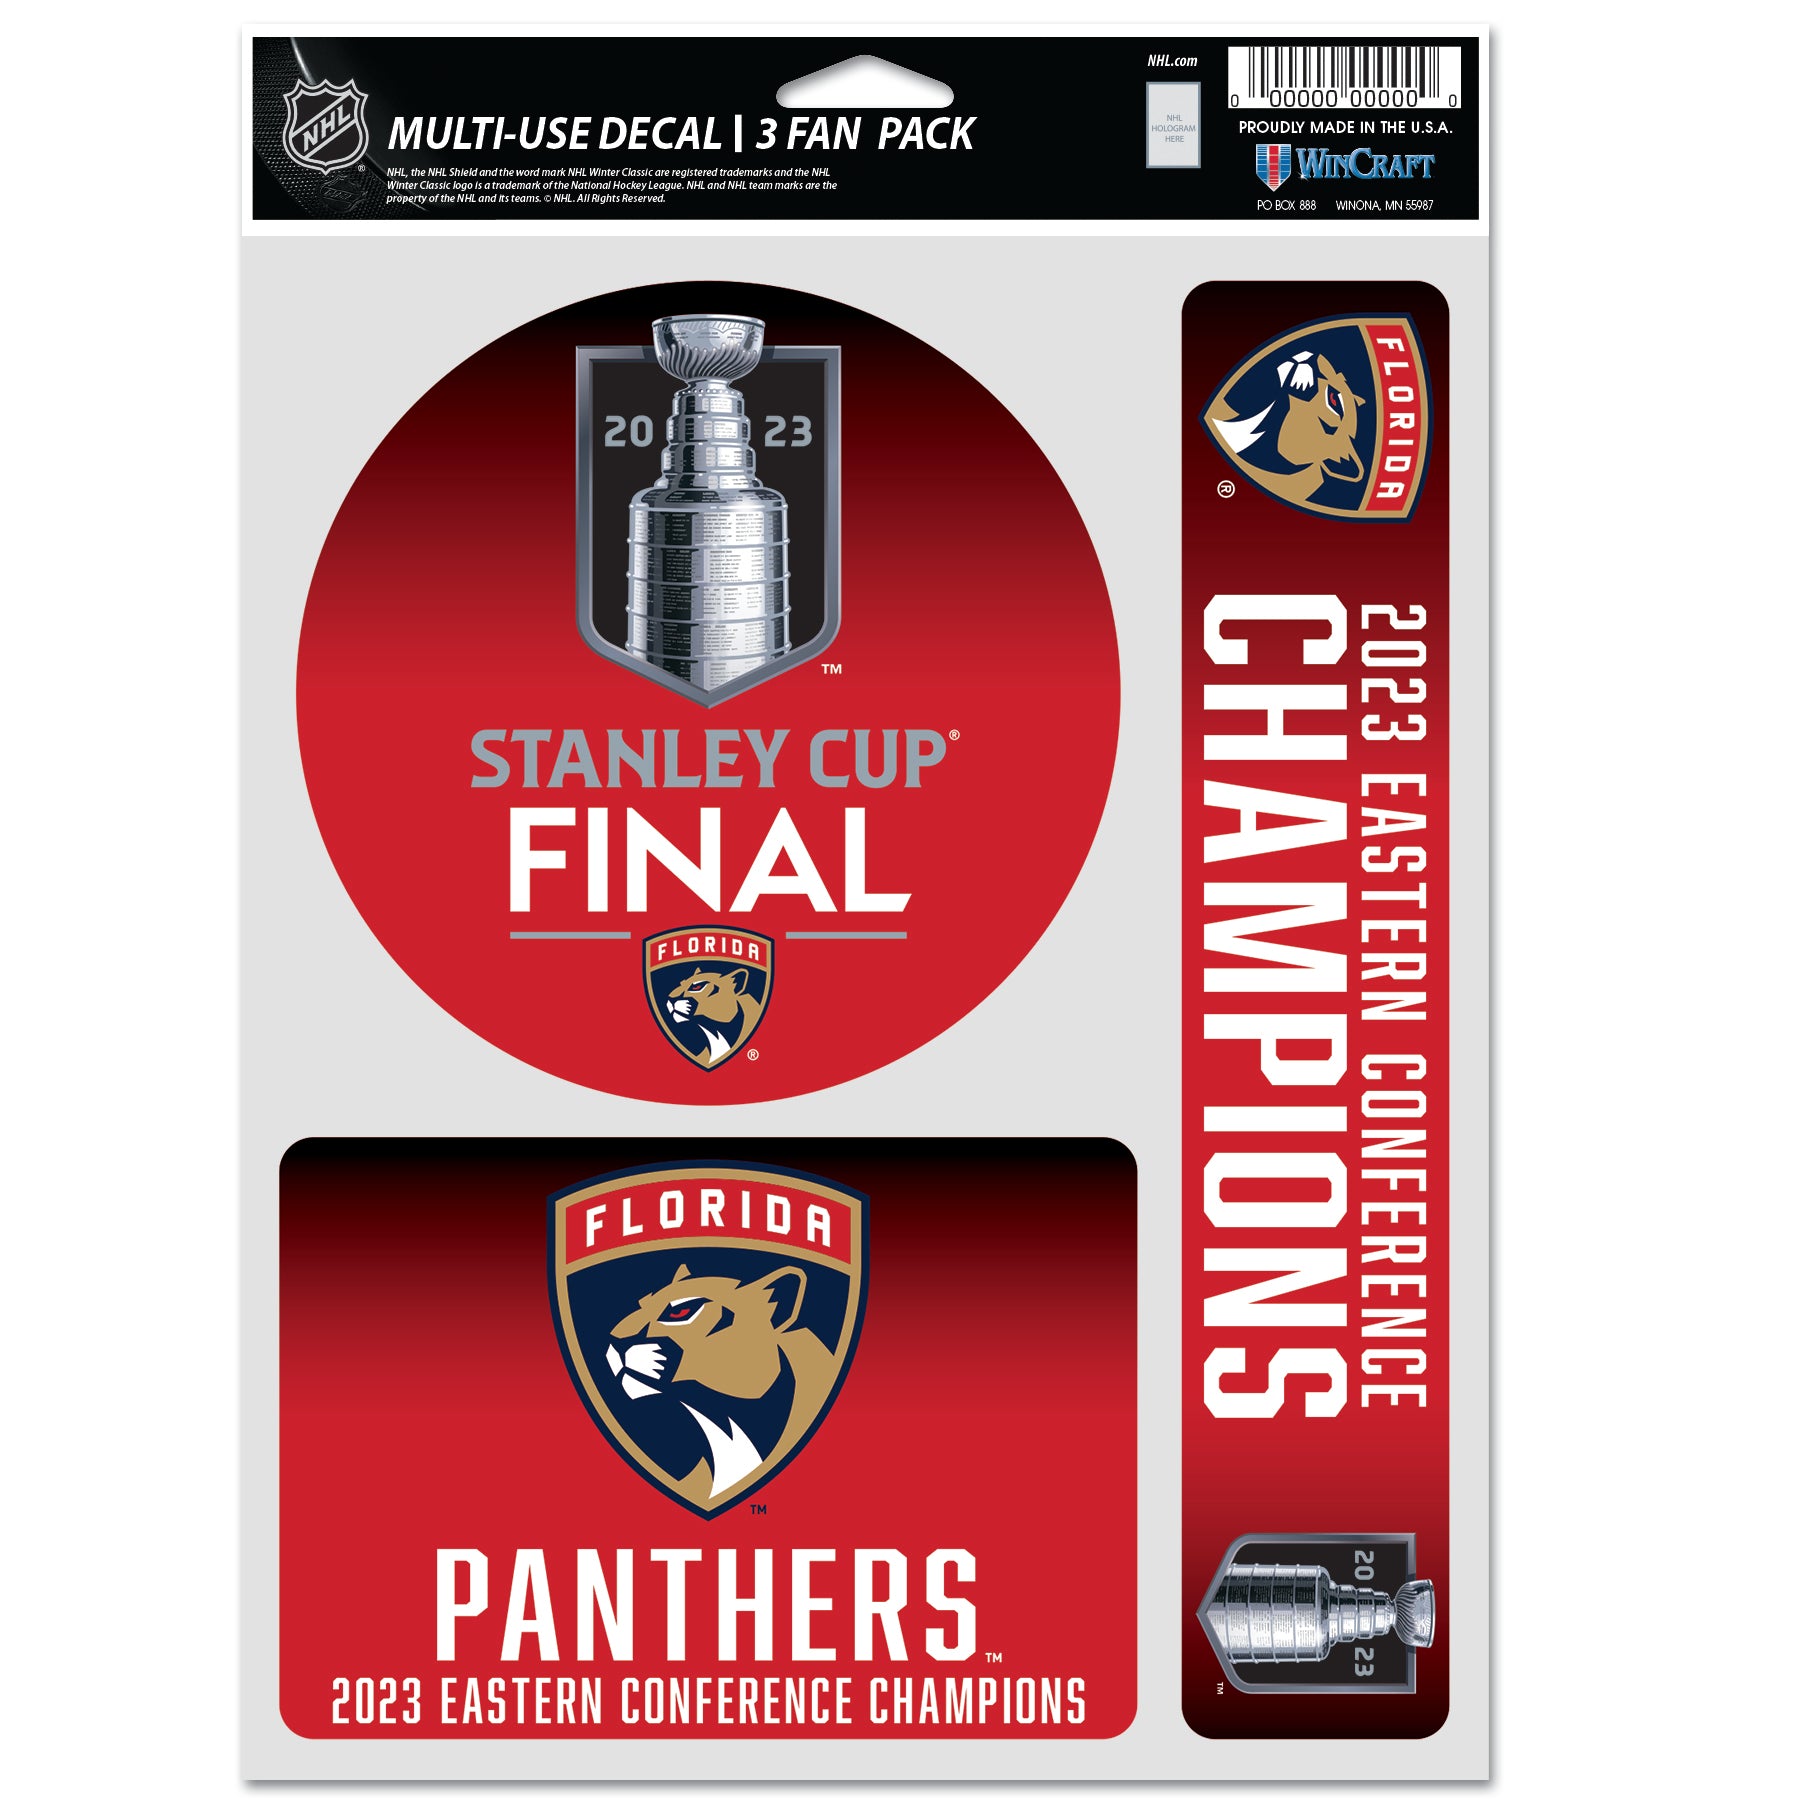 Florida Panthers Playoffs Logo - National Hockey League (NHL